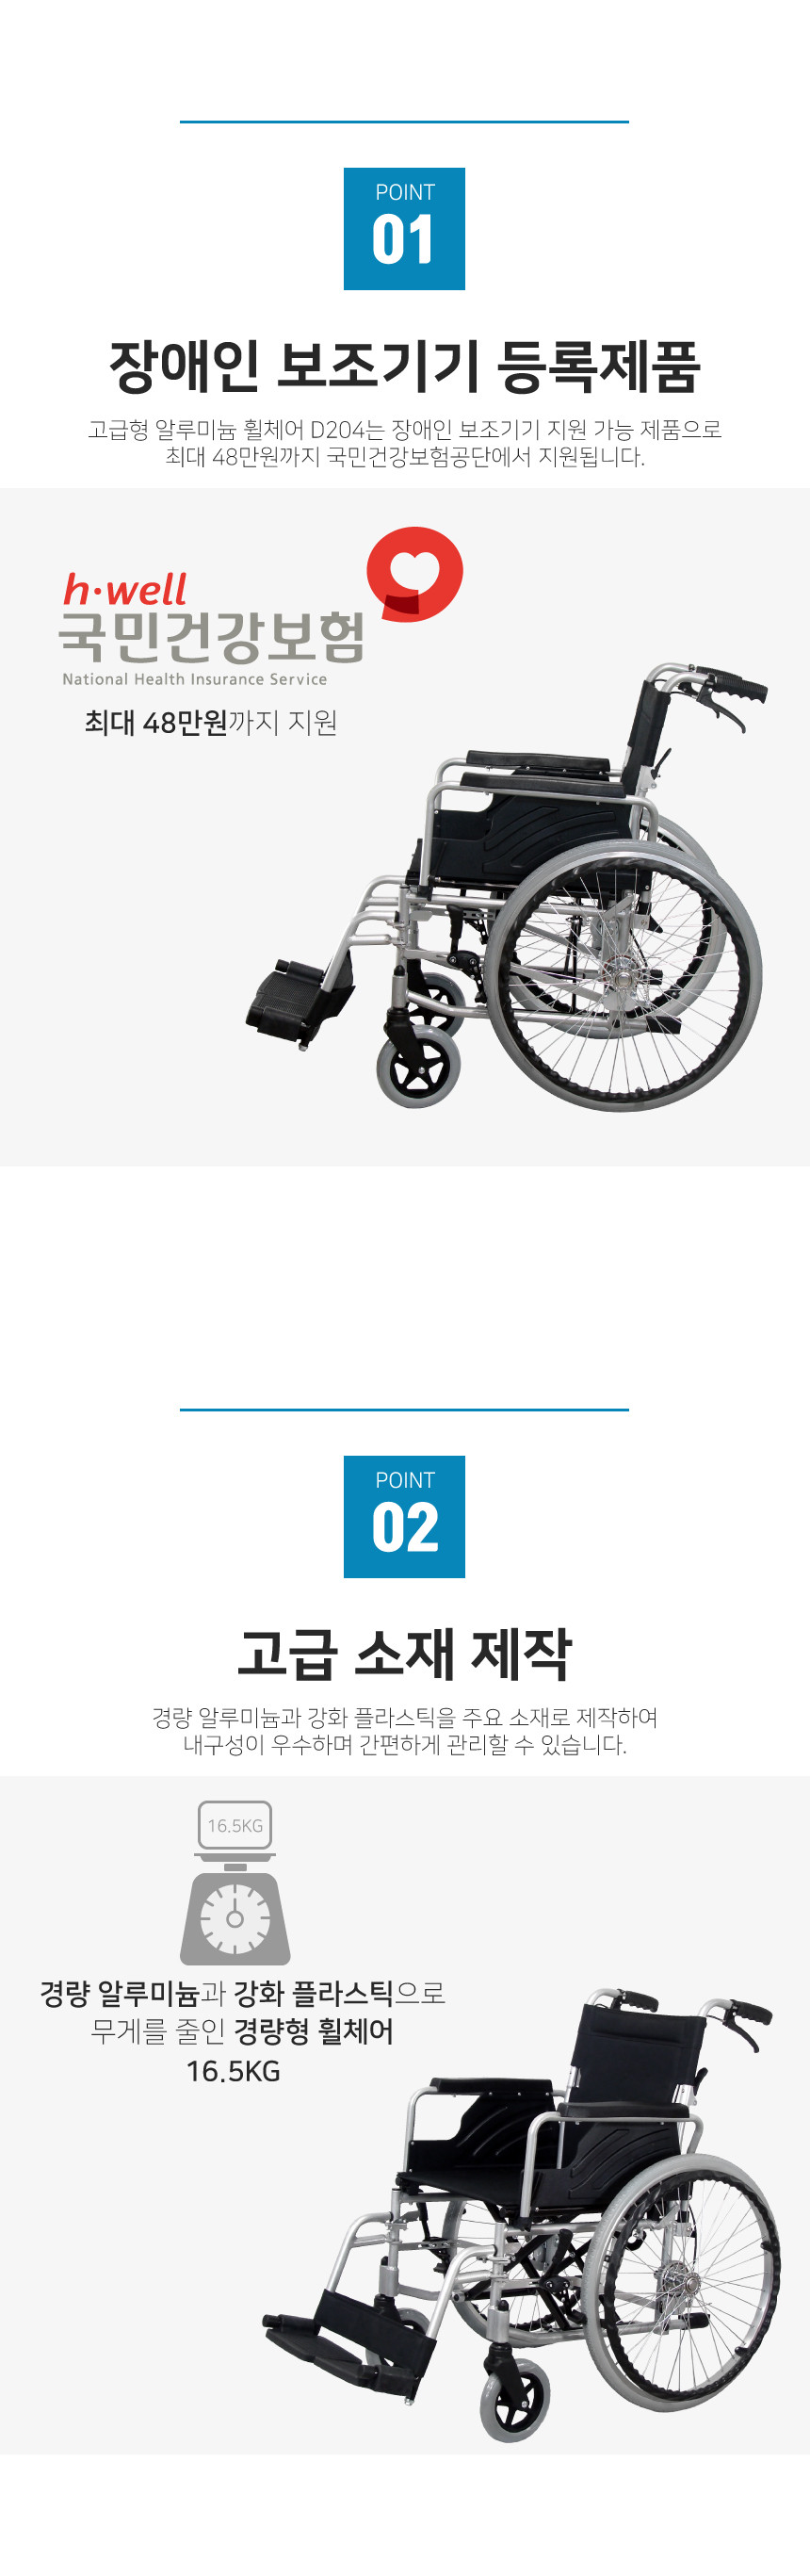 YBSOFT]Aluminium manual wheelchair D204 entry level manual wheelchair